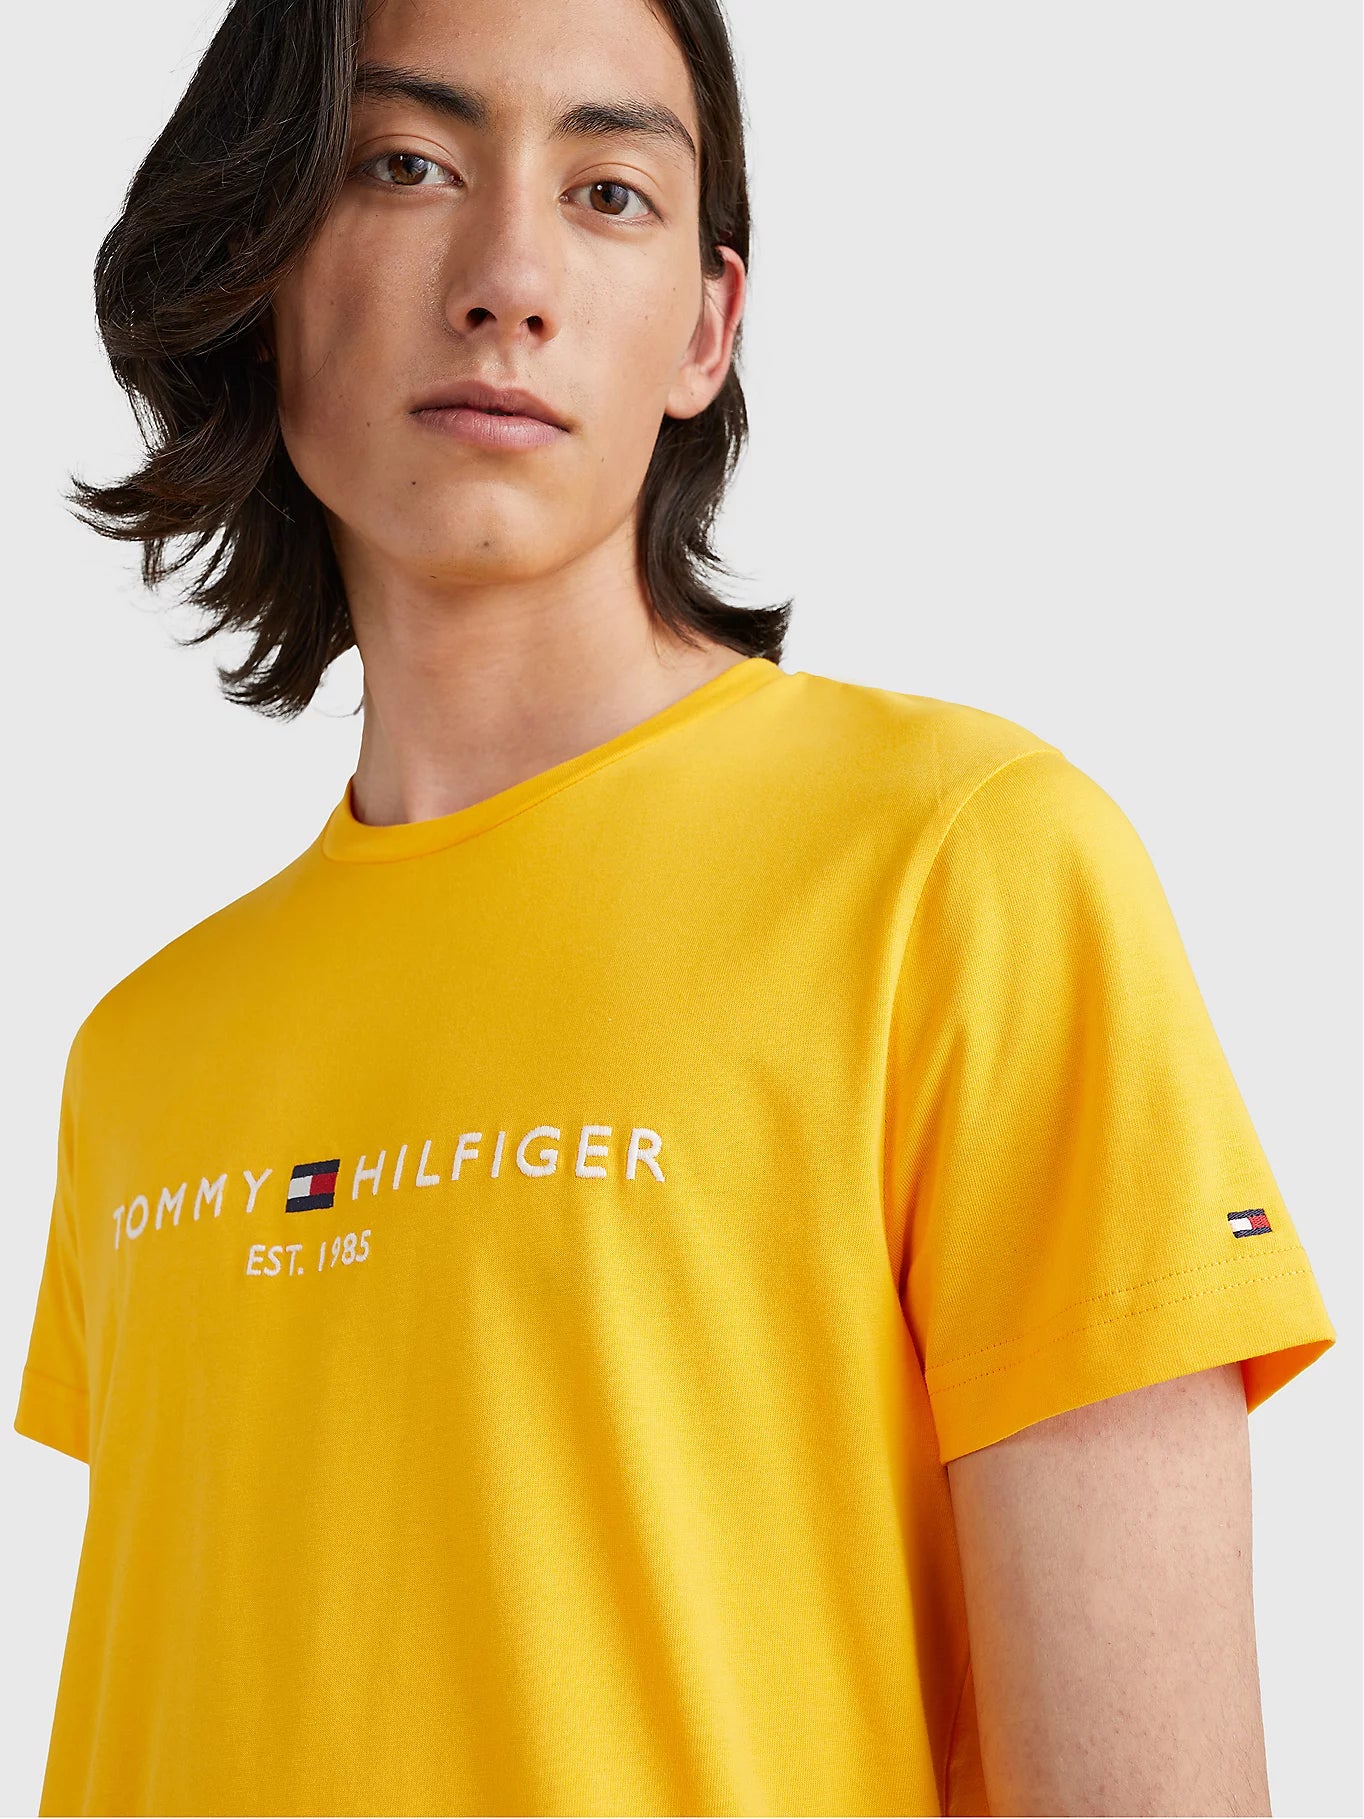 T-Shirt logo poitrine homme Tommy Hilfiger jaune I Georgespaul